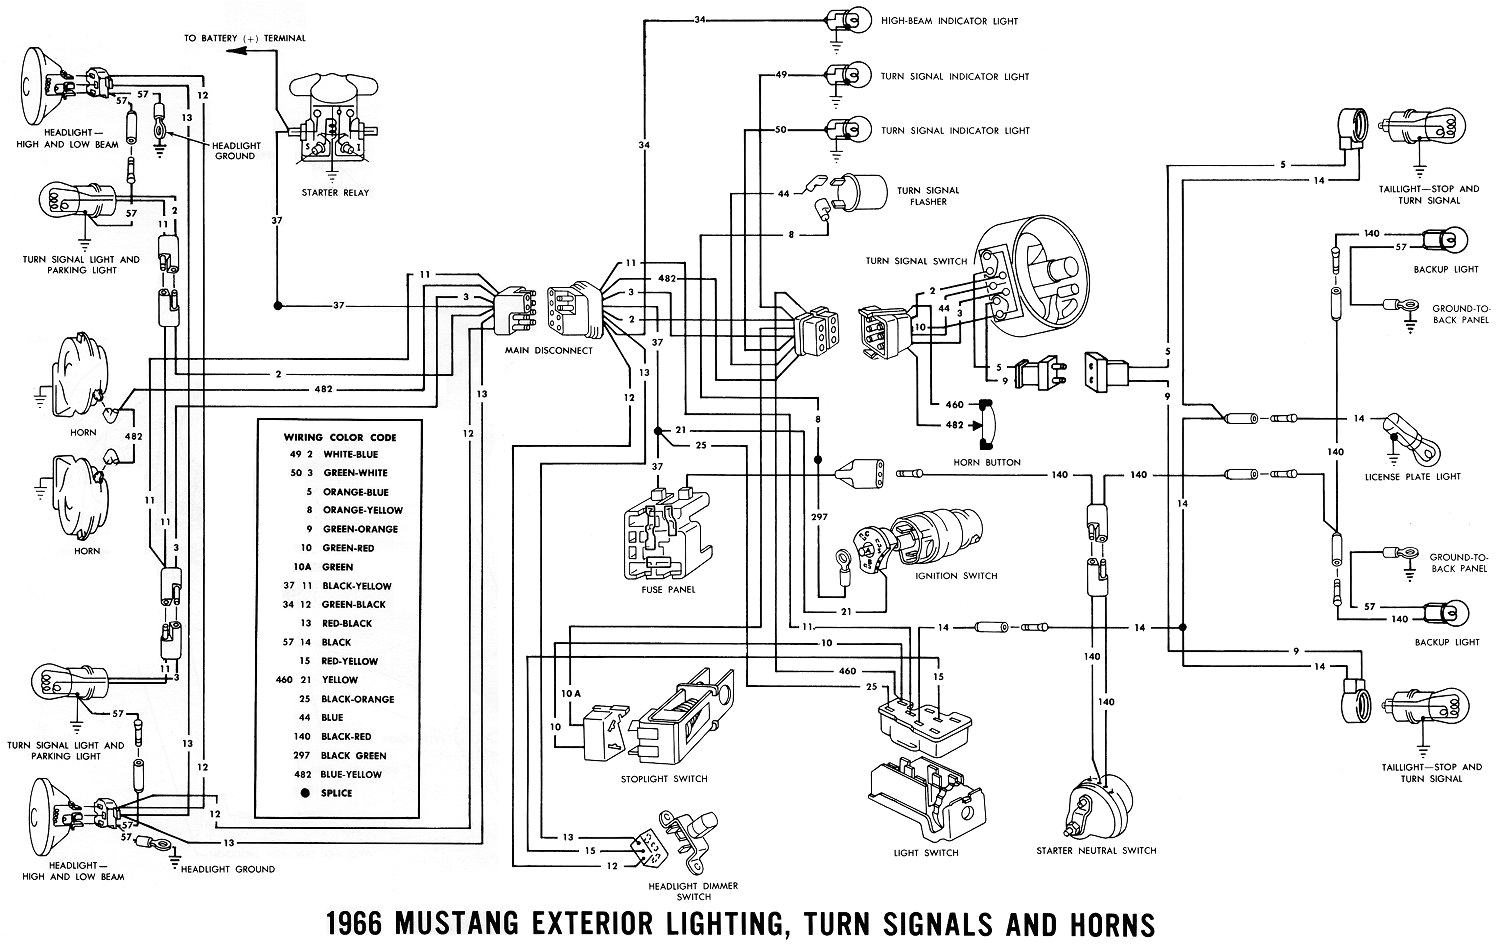 1966 mustang wiring diagrams